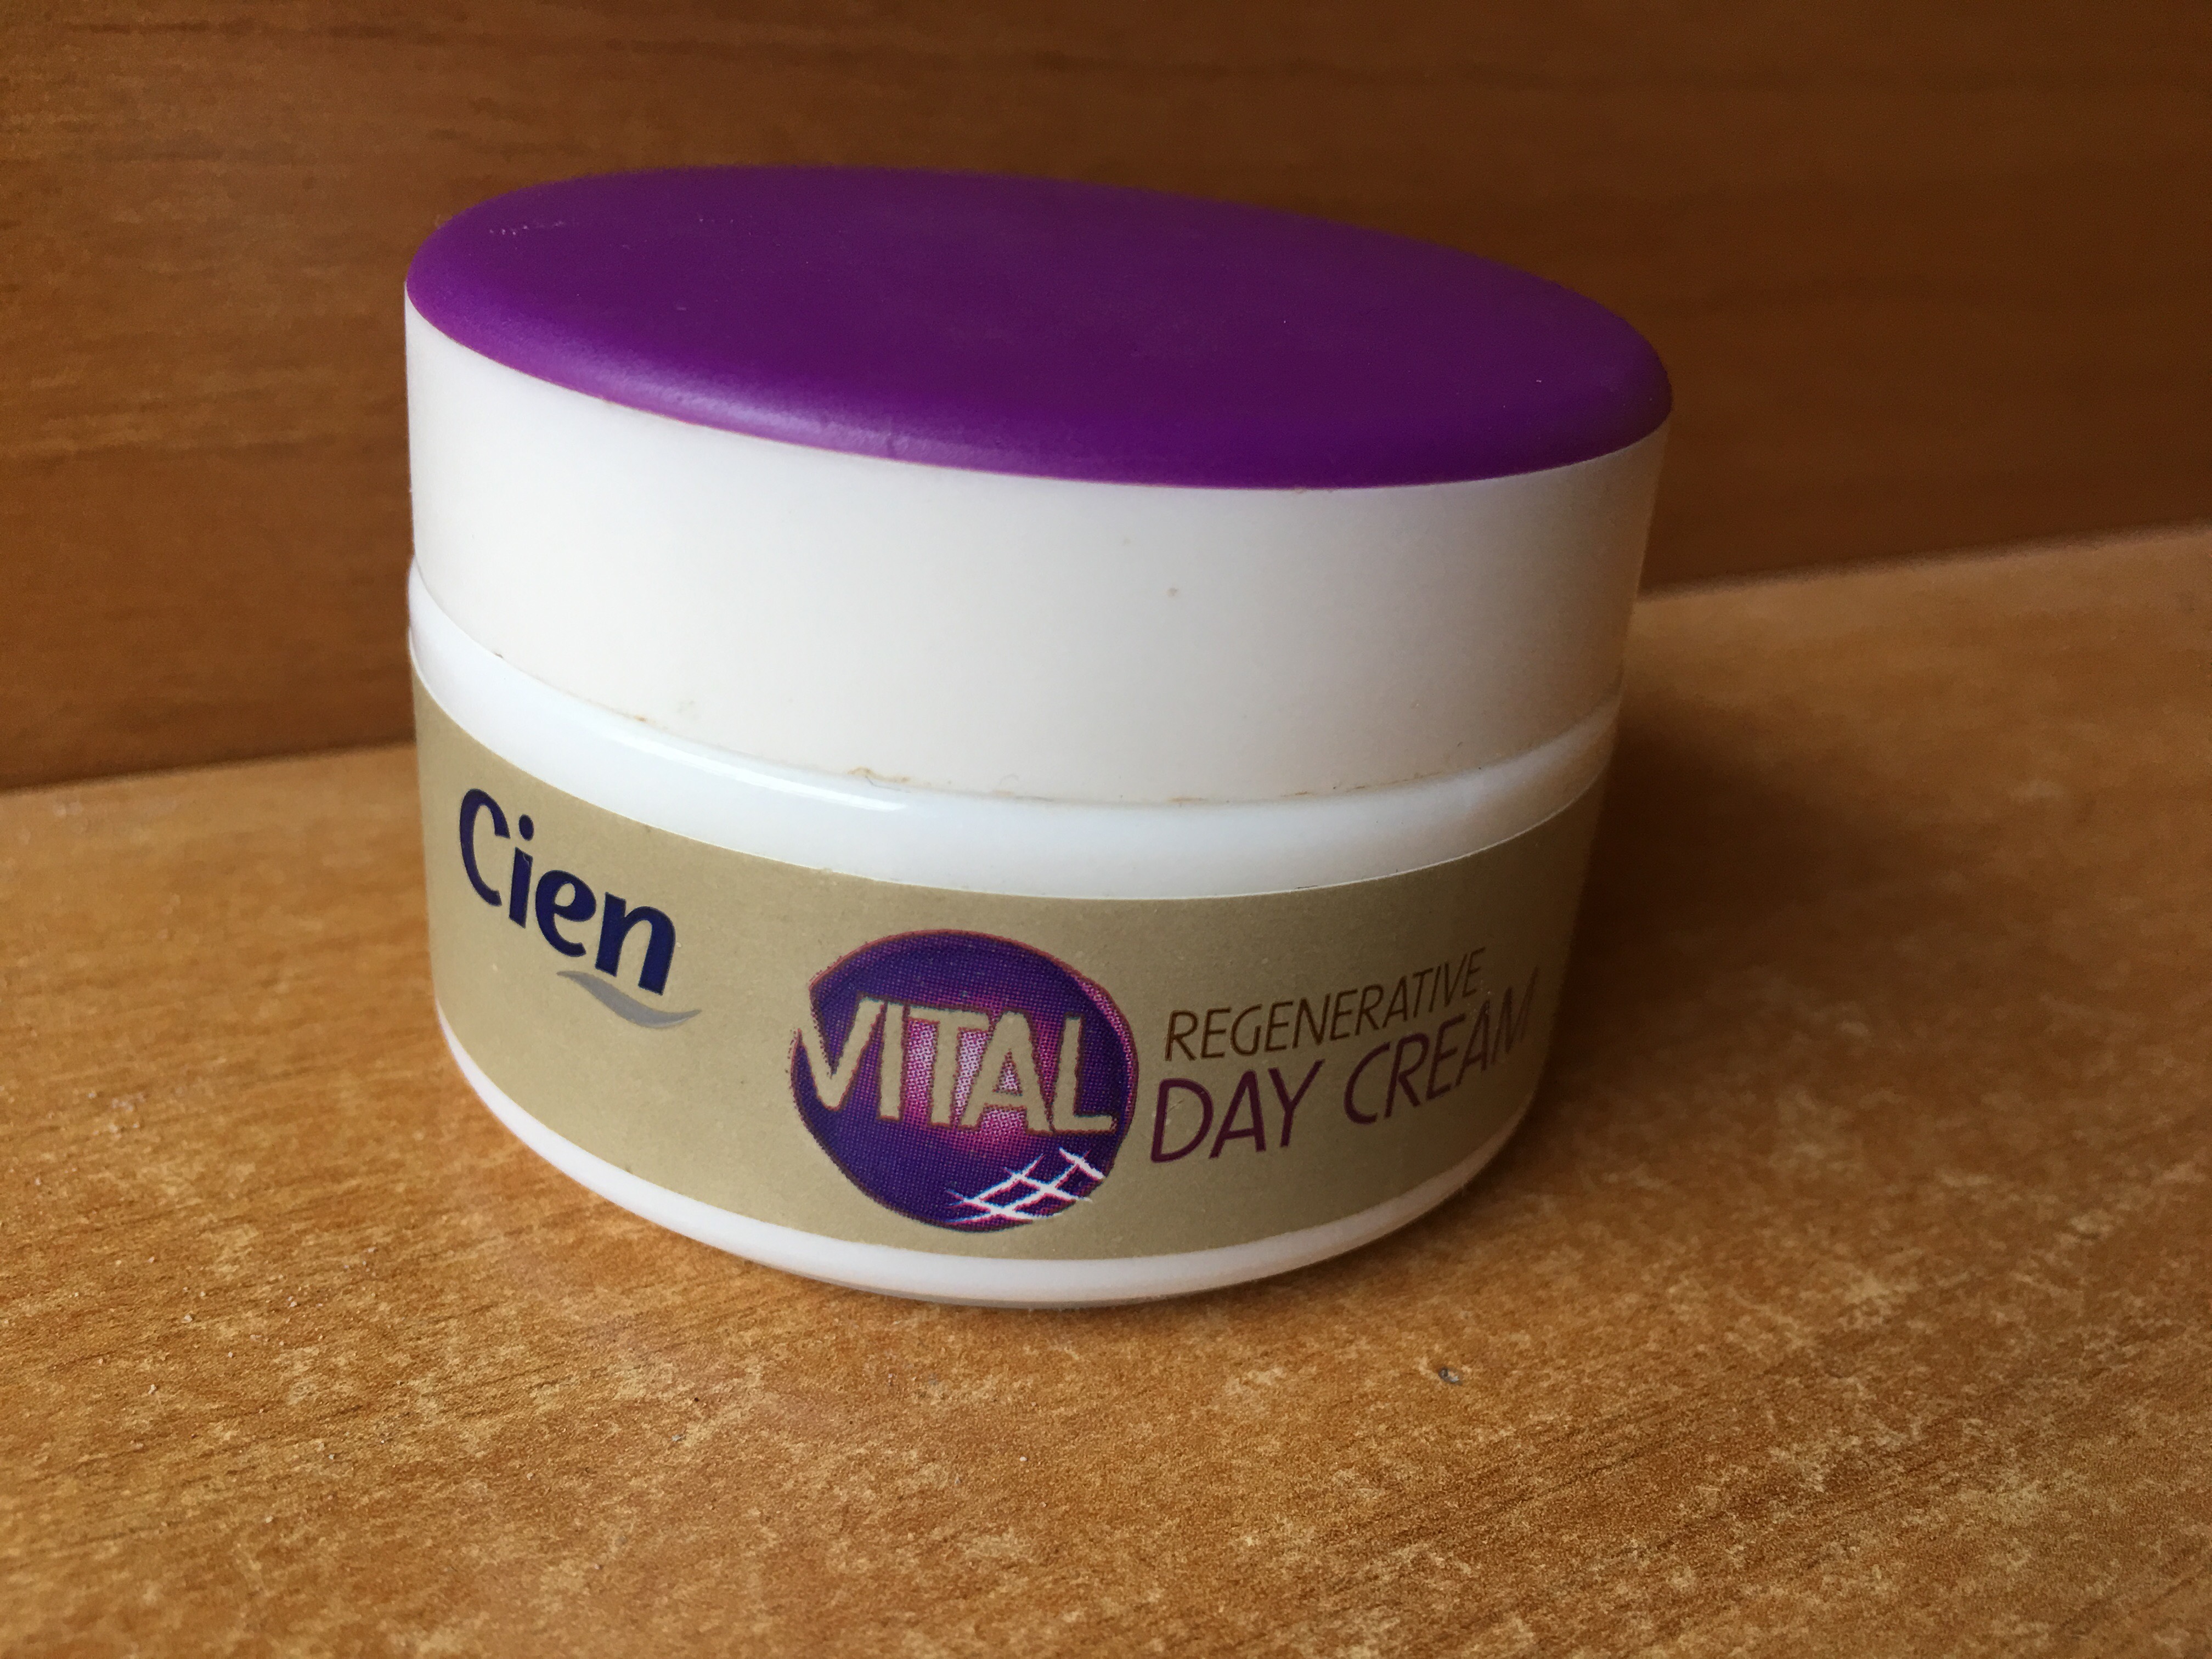 Cien Vital Regenerative Day Cream Lost On Make Up